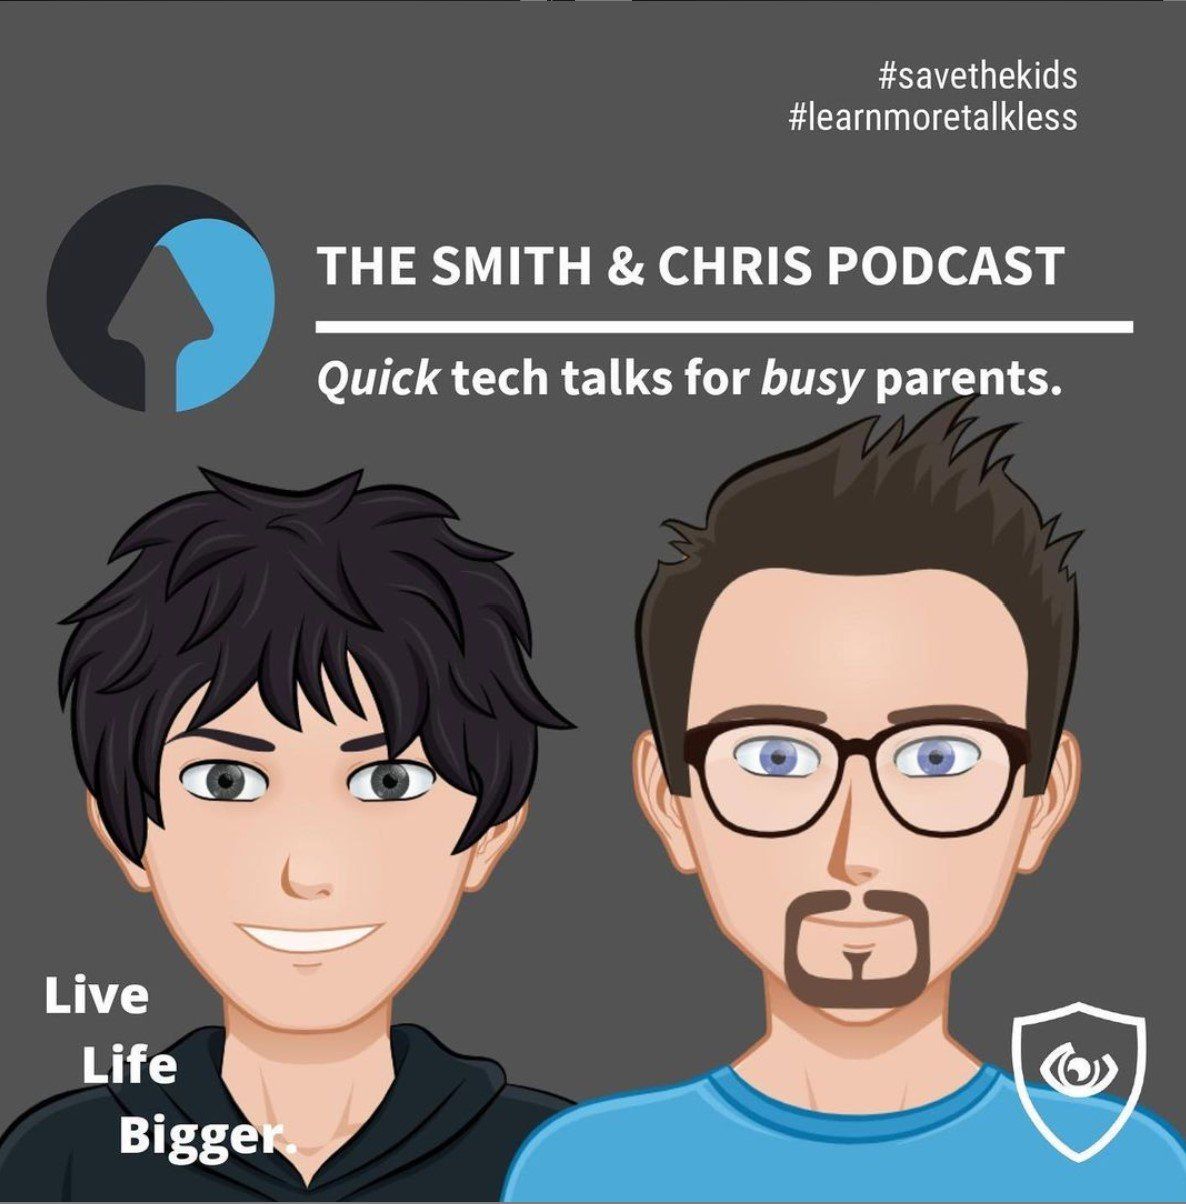 The Smith & Chris Podcast